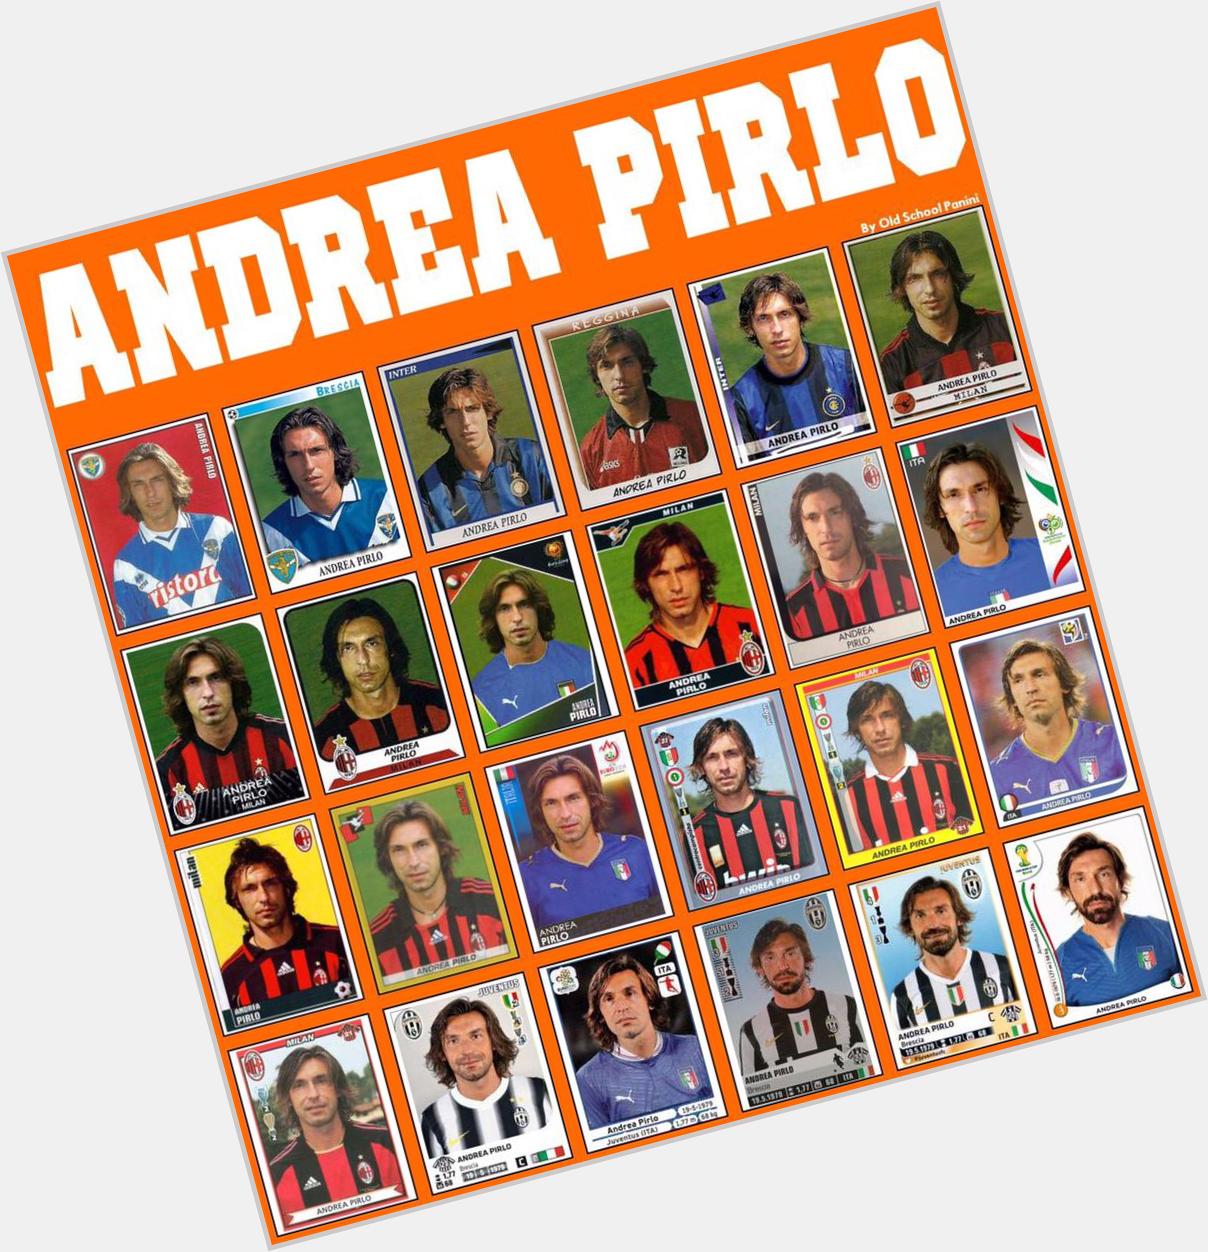 Happy birthday to Andrea Pirlo!! 